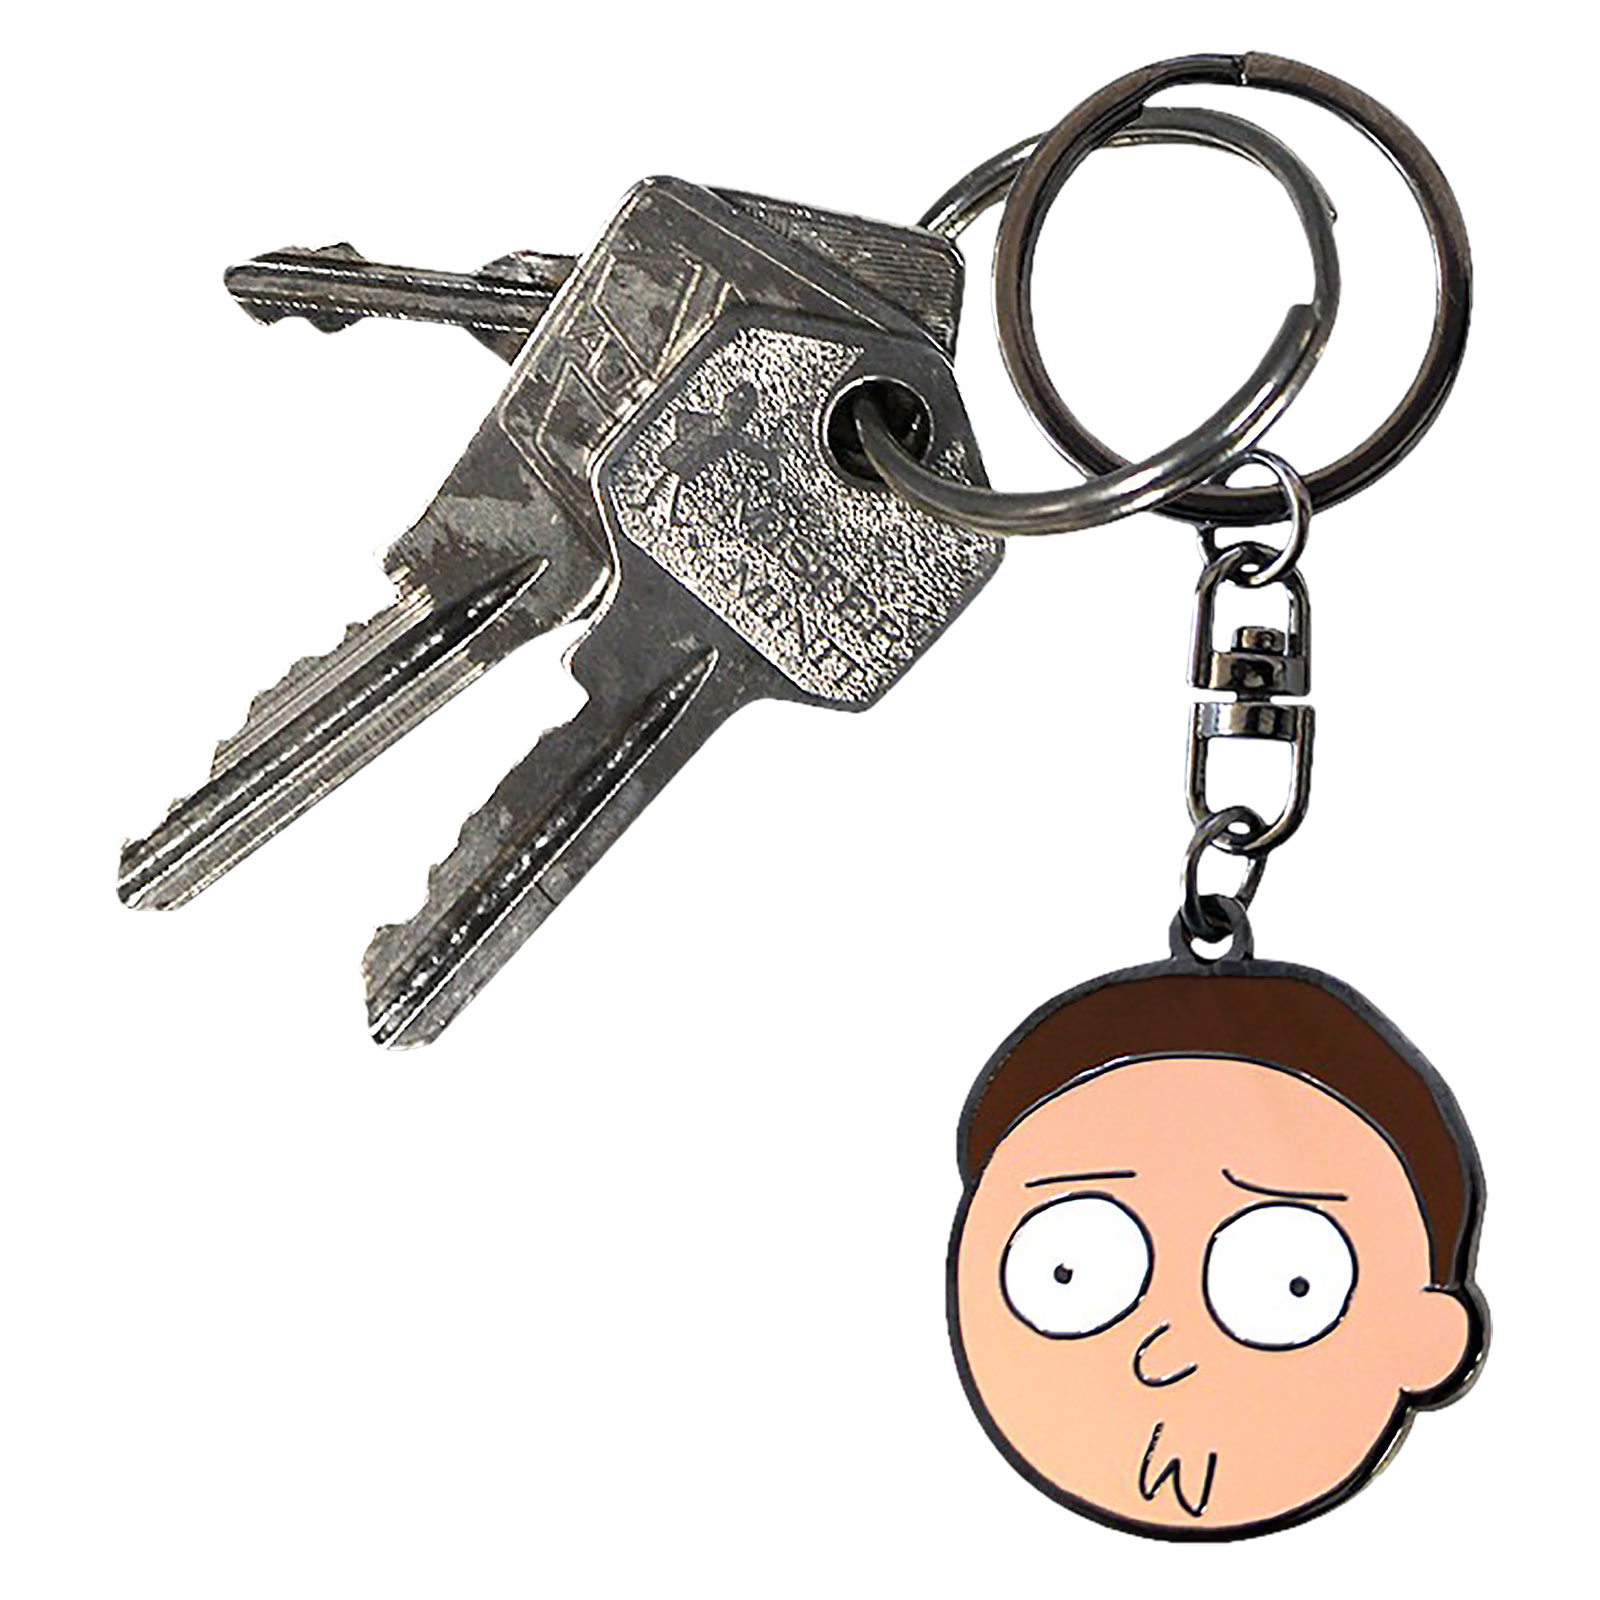 Rick and Morty - Morty Face Schlüsselanhänger